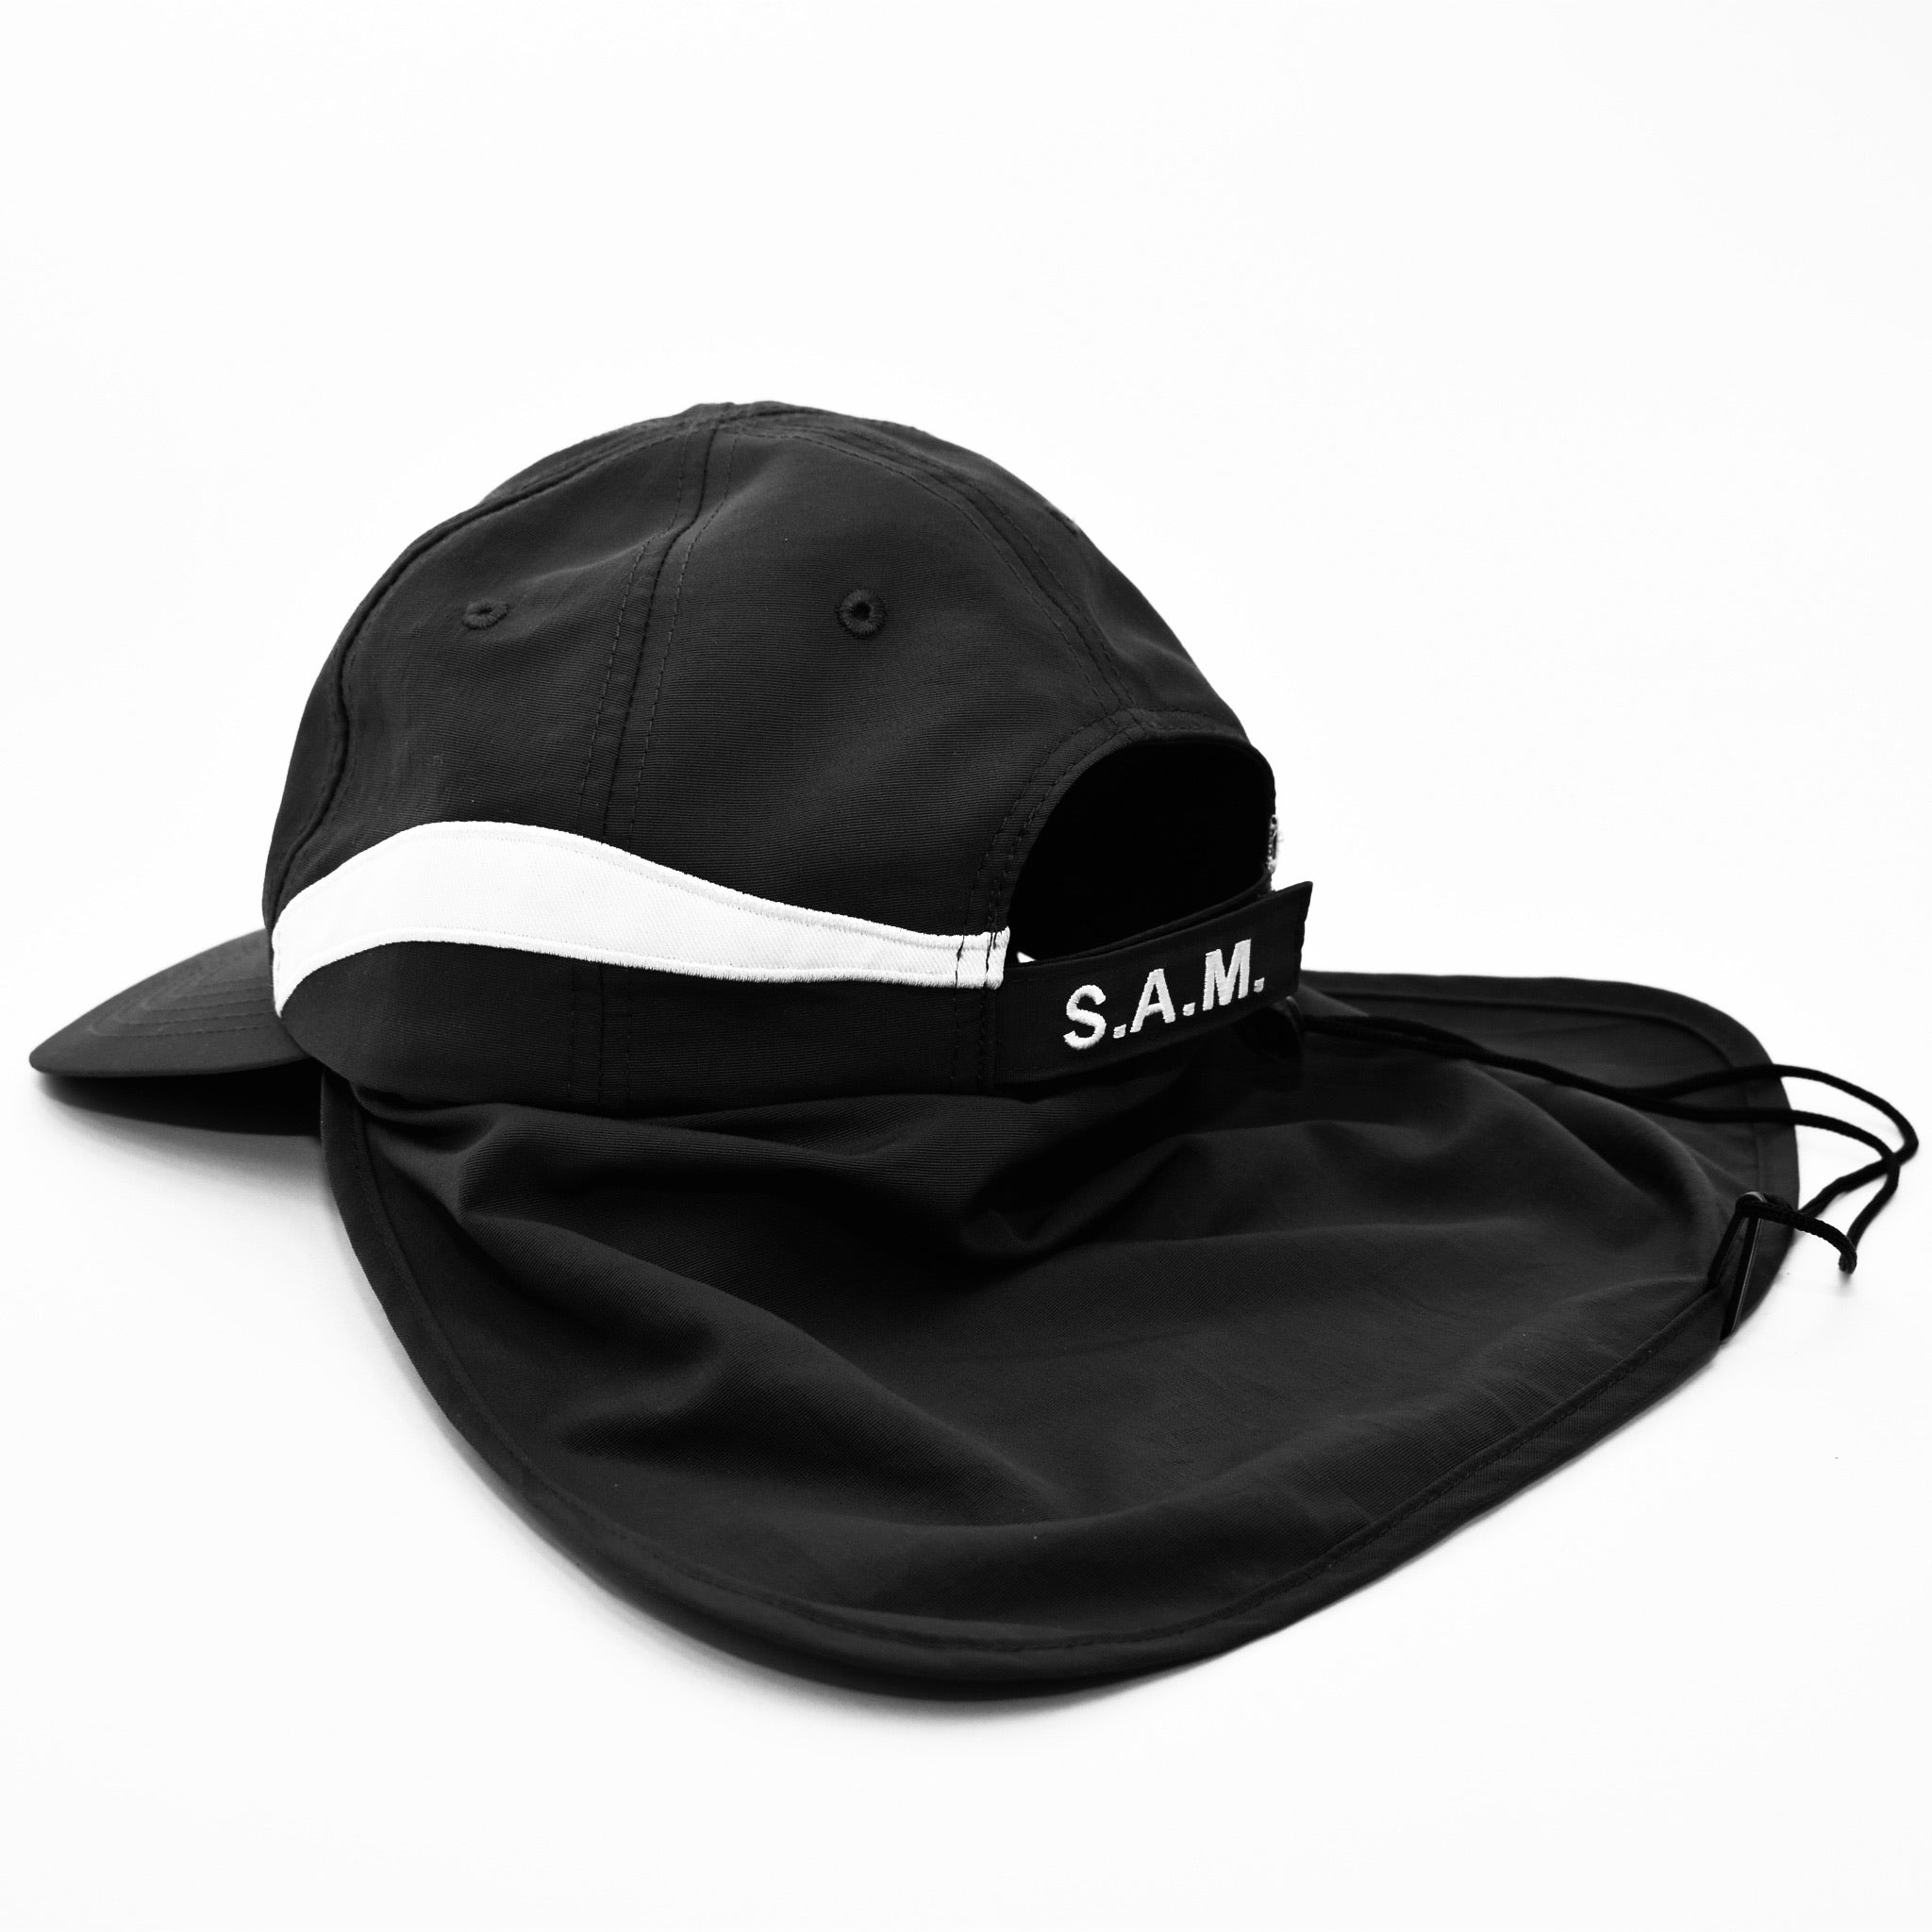 water sports Surf hat upf50+ sun protective fabric / shade at